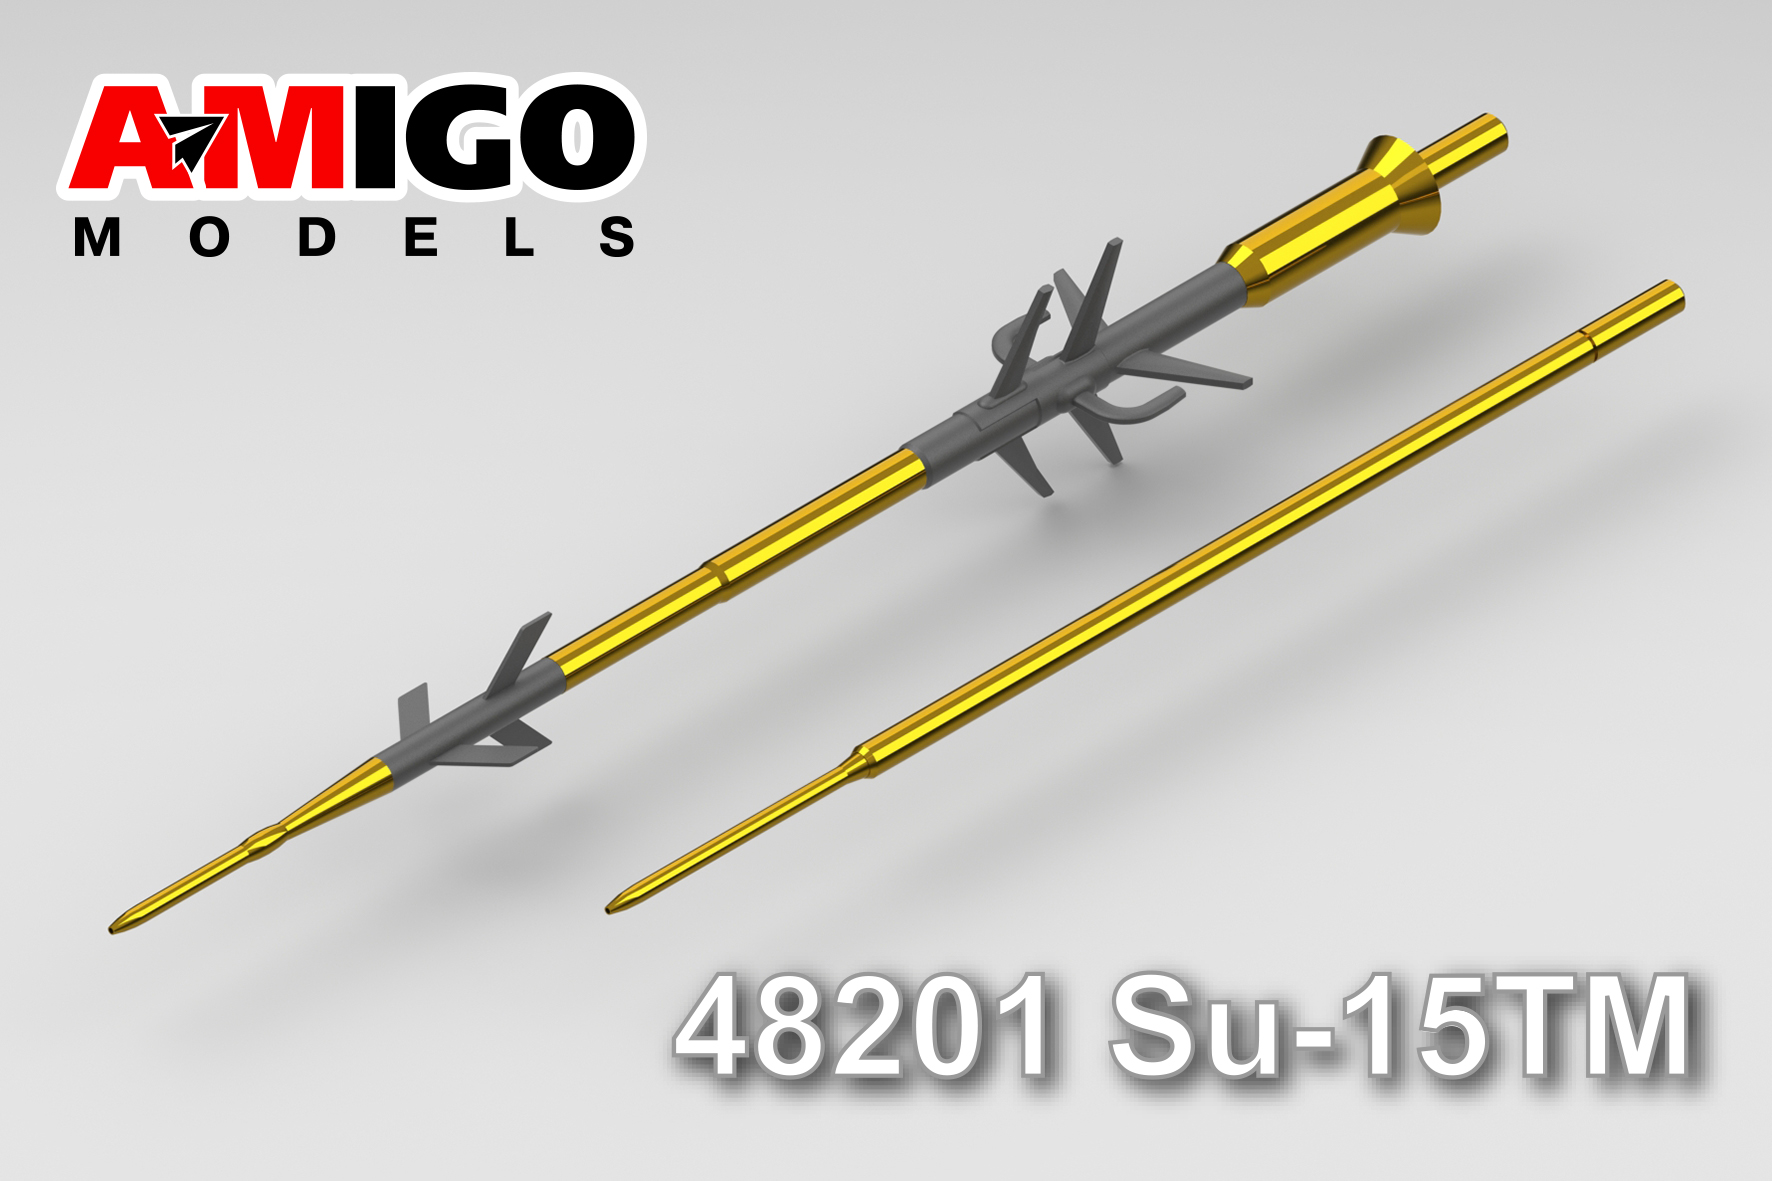 Aircraft detailing sets (brass) 1/48 Pitot tube of Su-15TM family aircraft (Amigo Models)